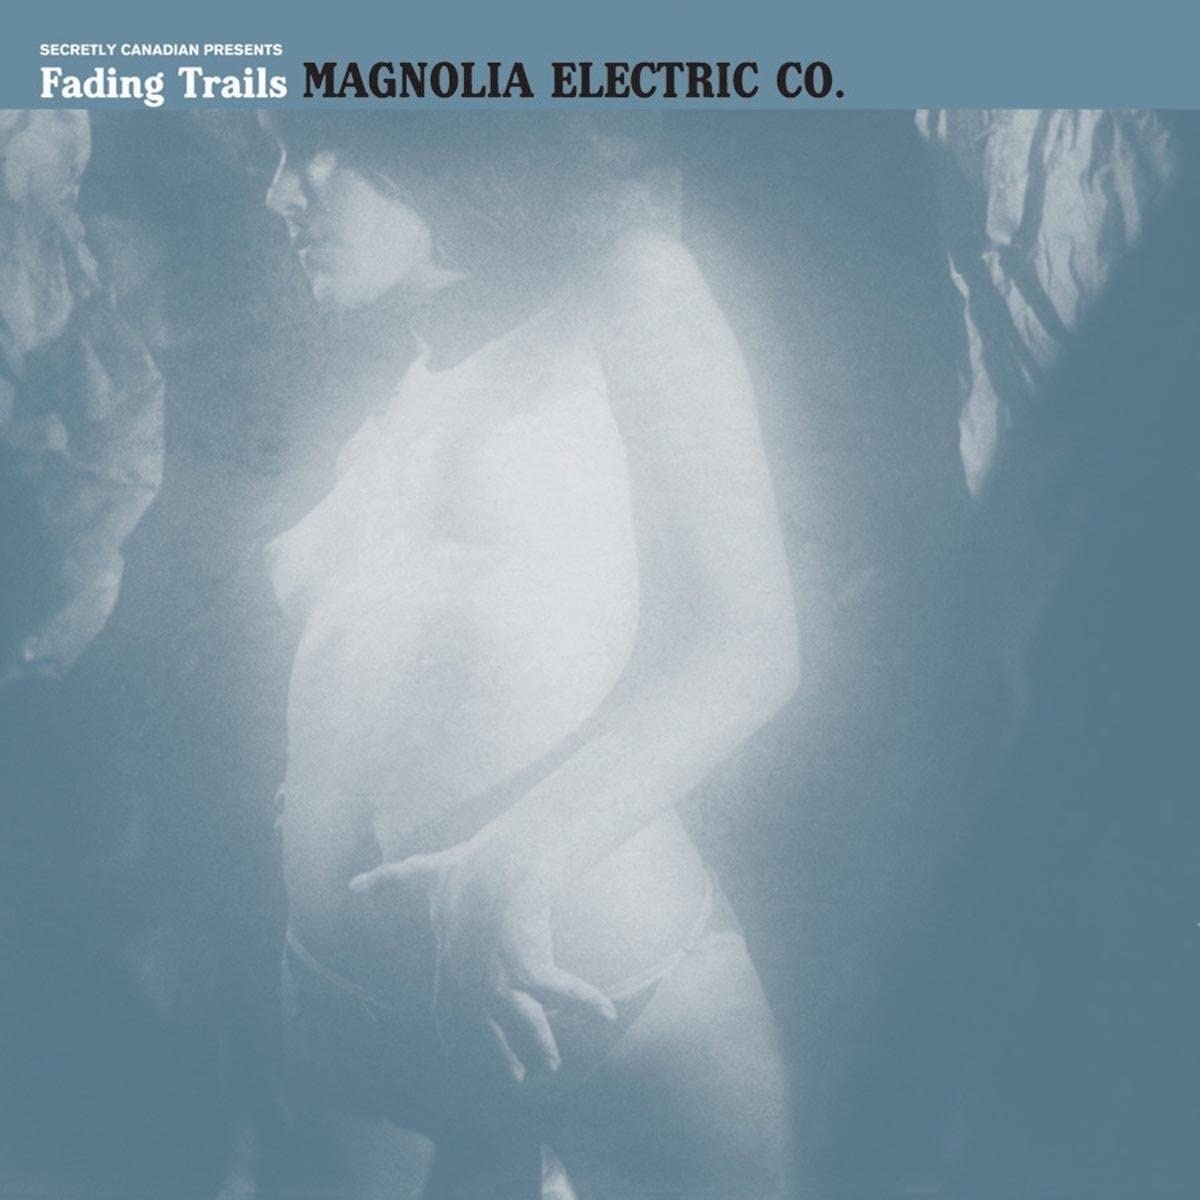 Secretly Canadian Magnolia Electric Co. - Fading Trails